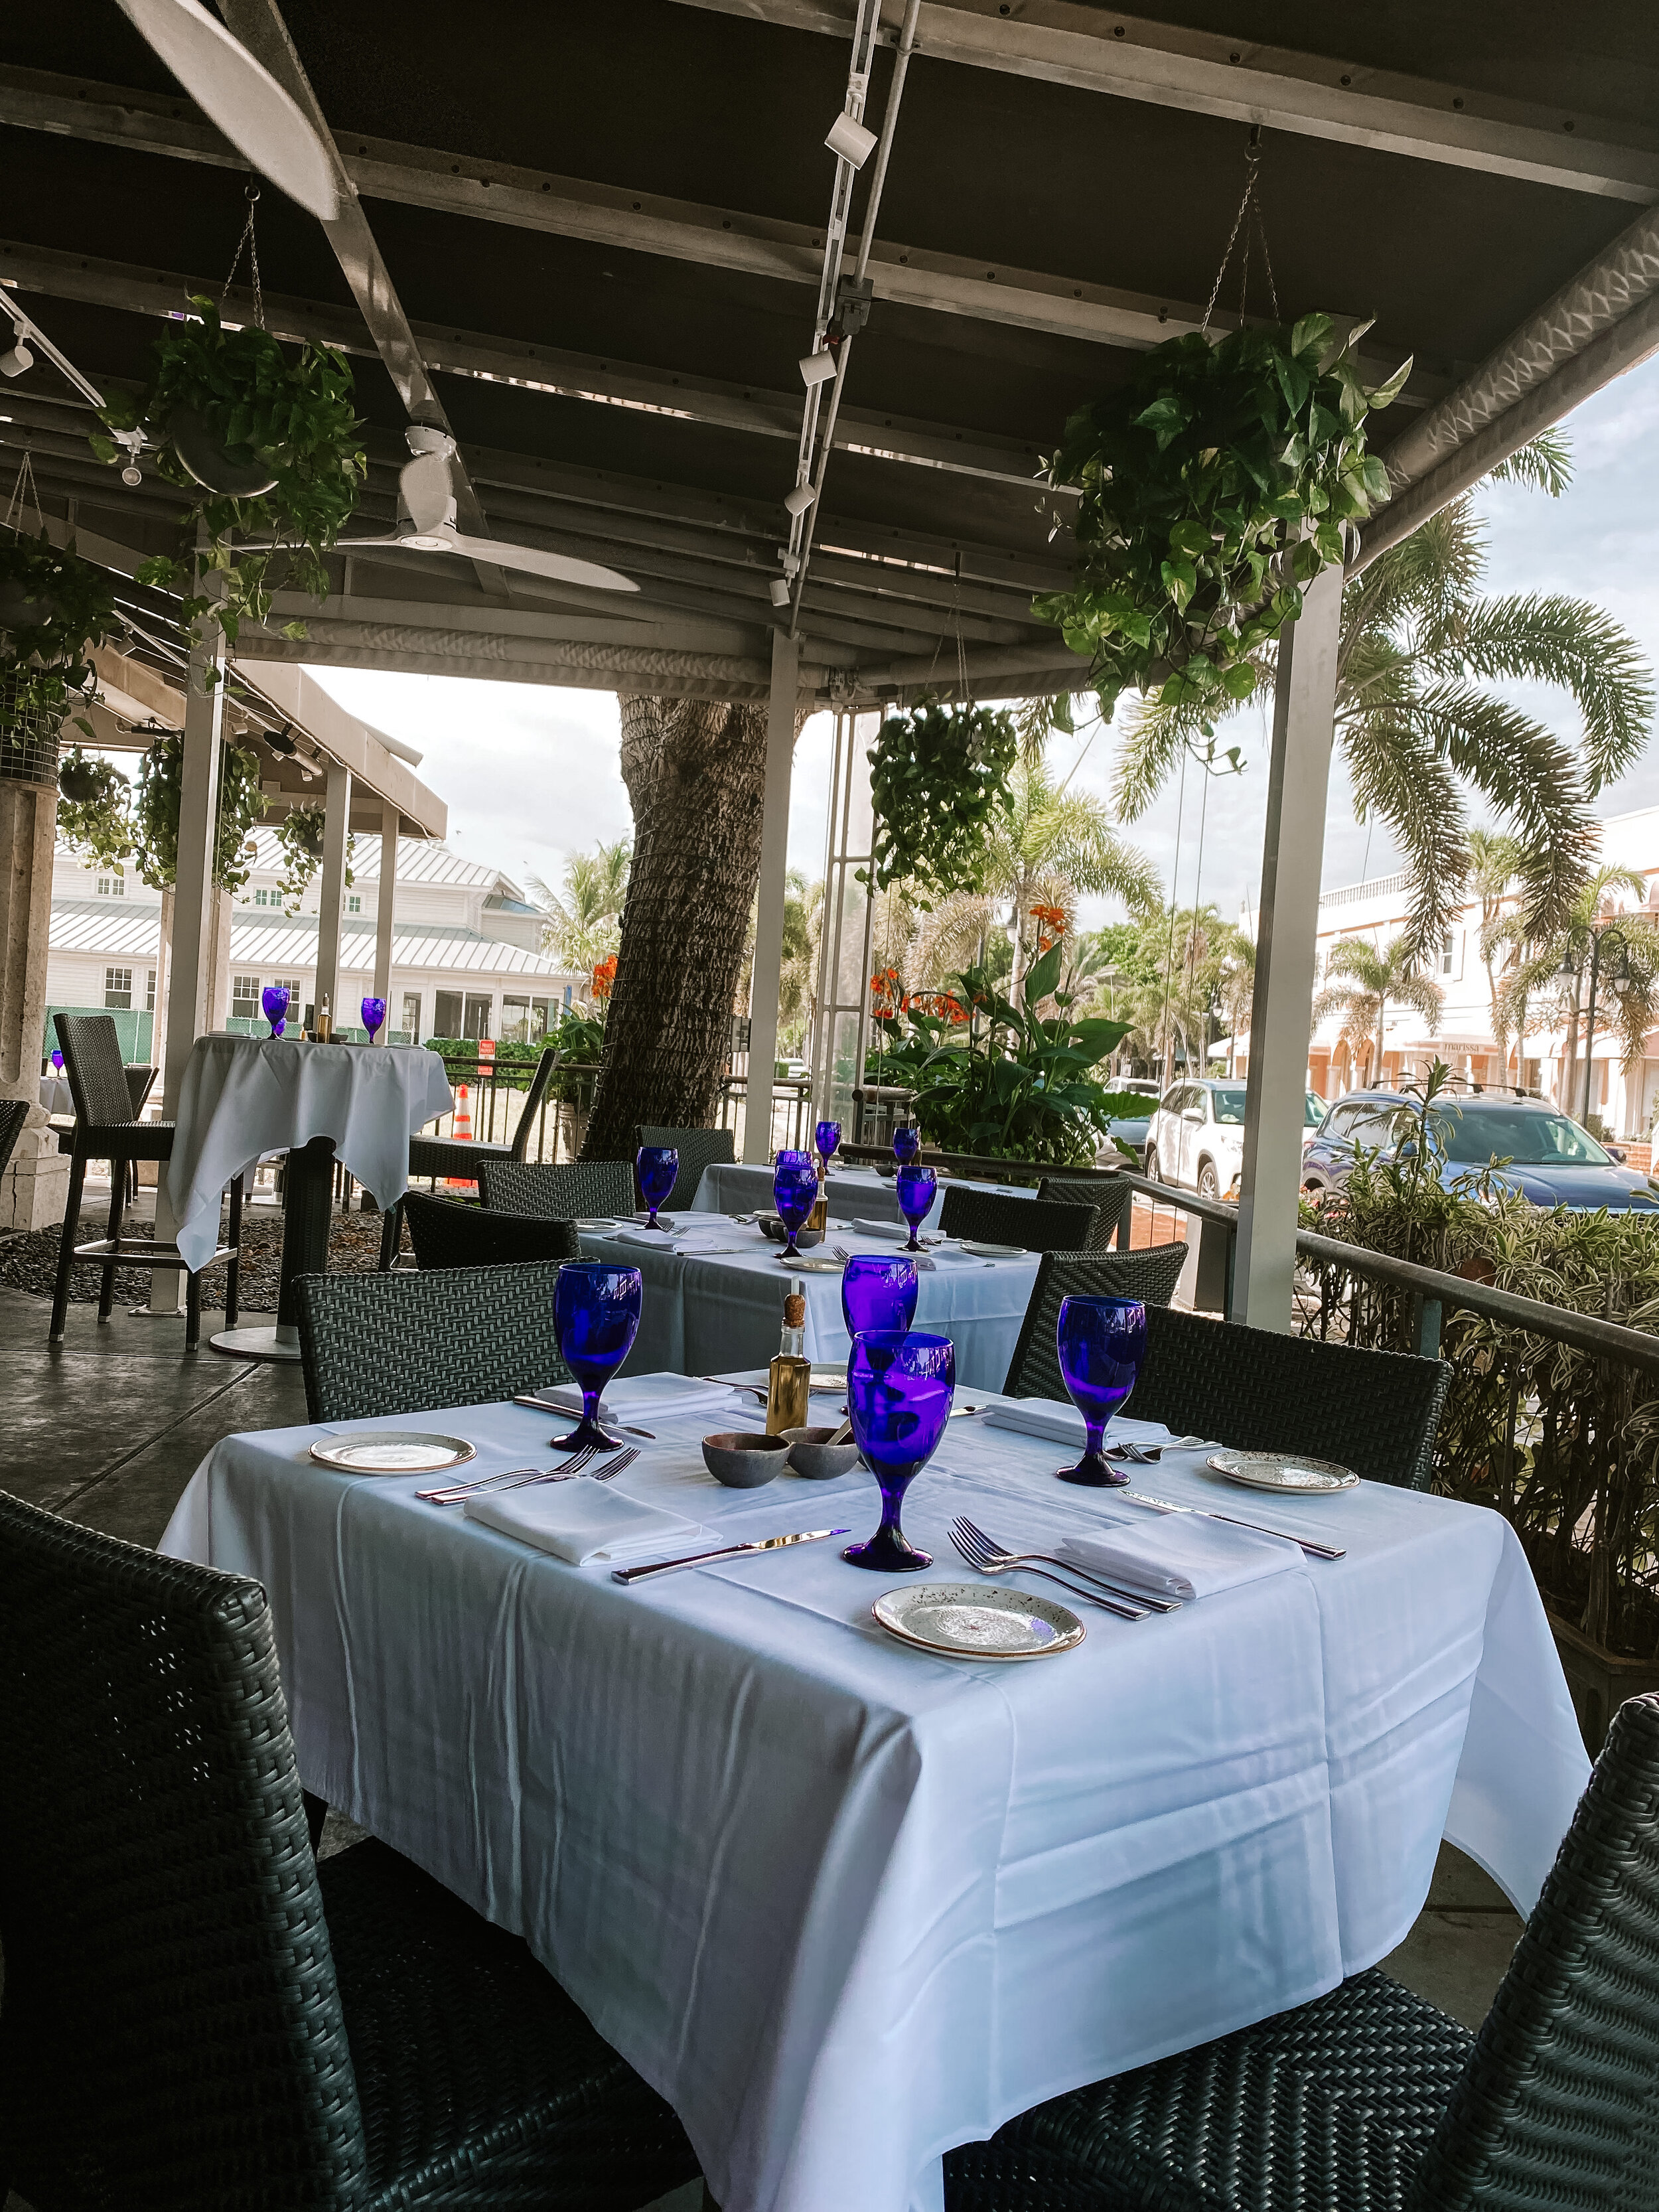 Sea Salt Restaurant - Best Date Night Restaurants in Naples Florida.JPG